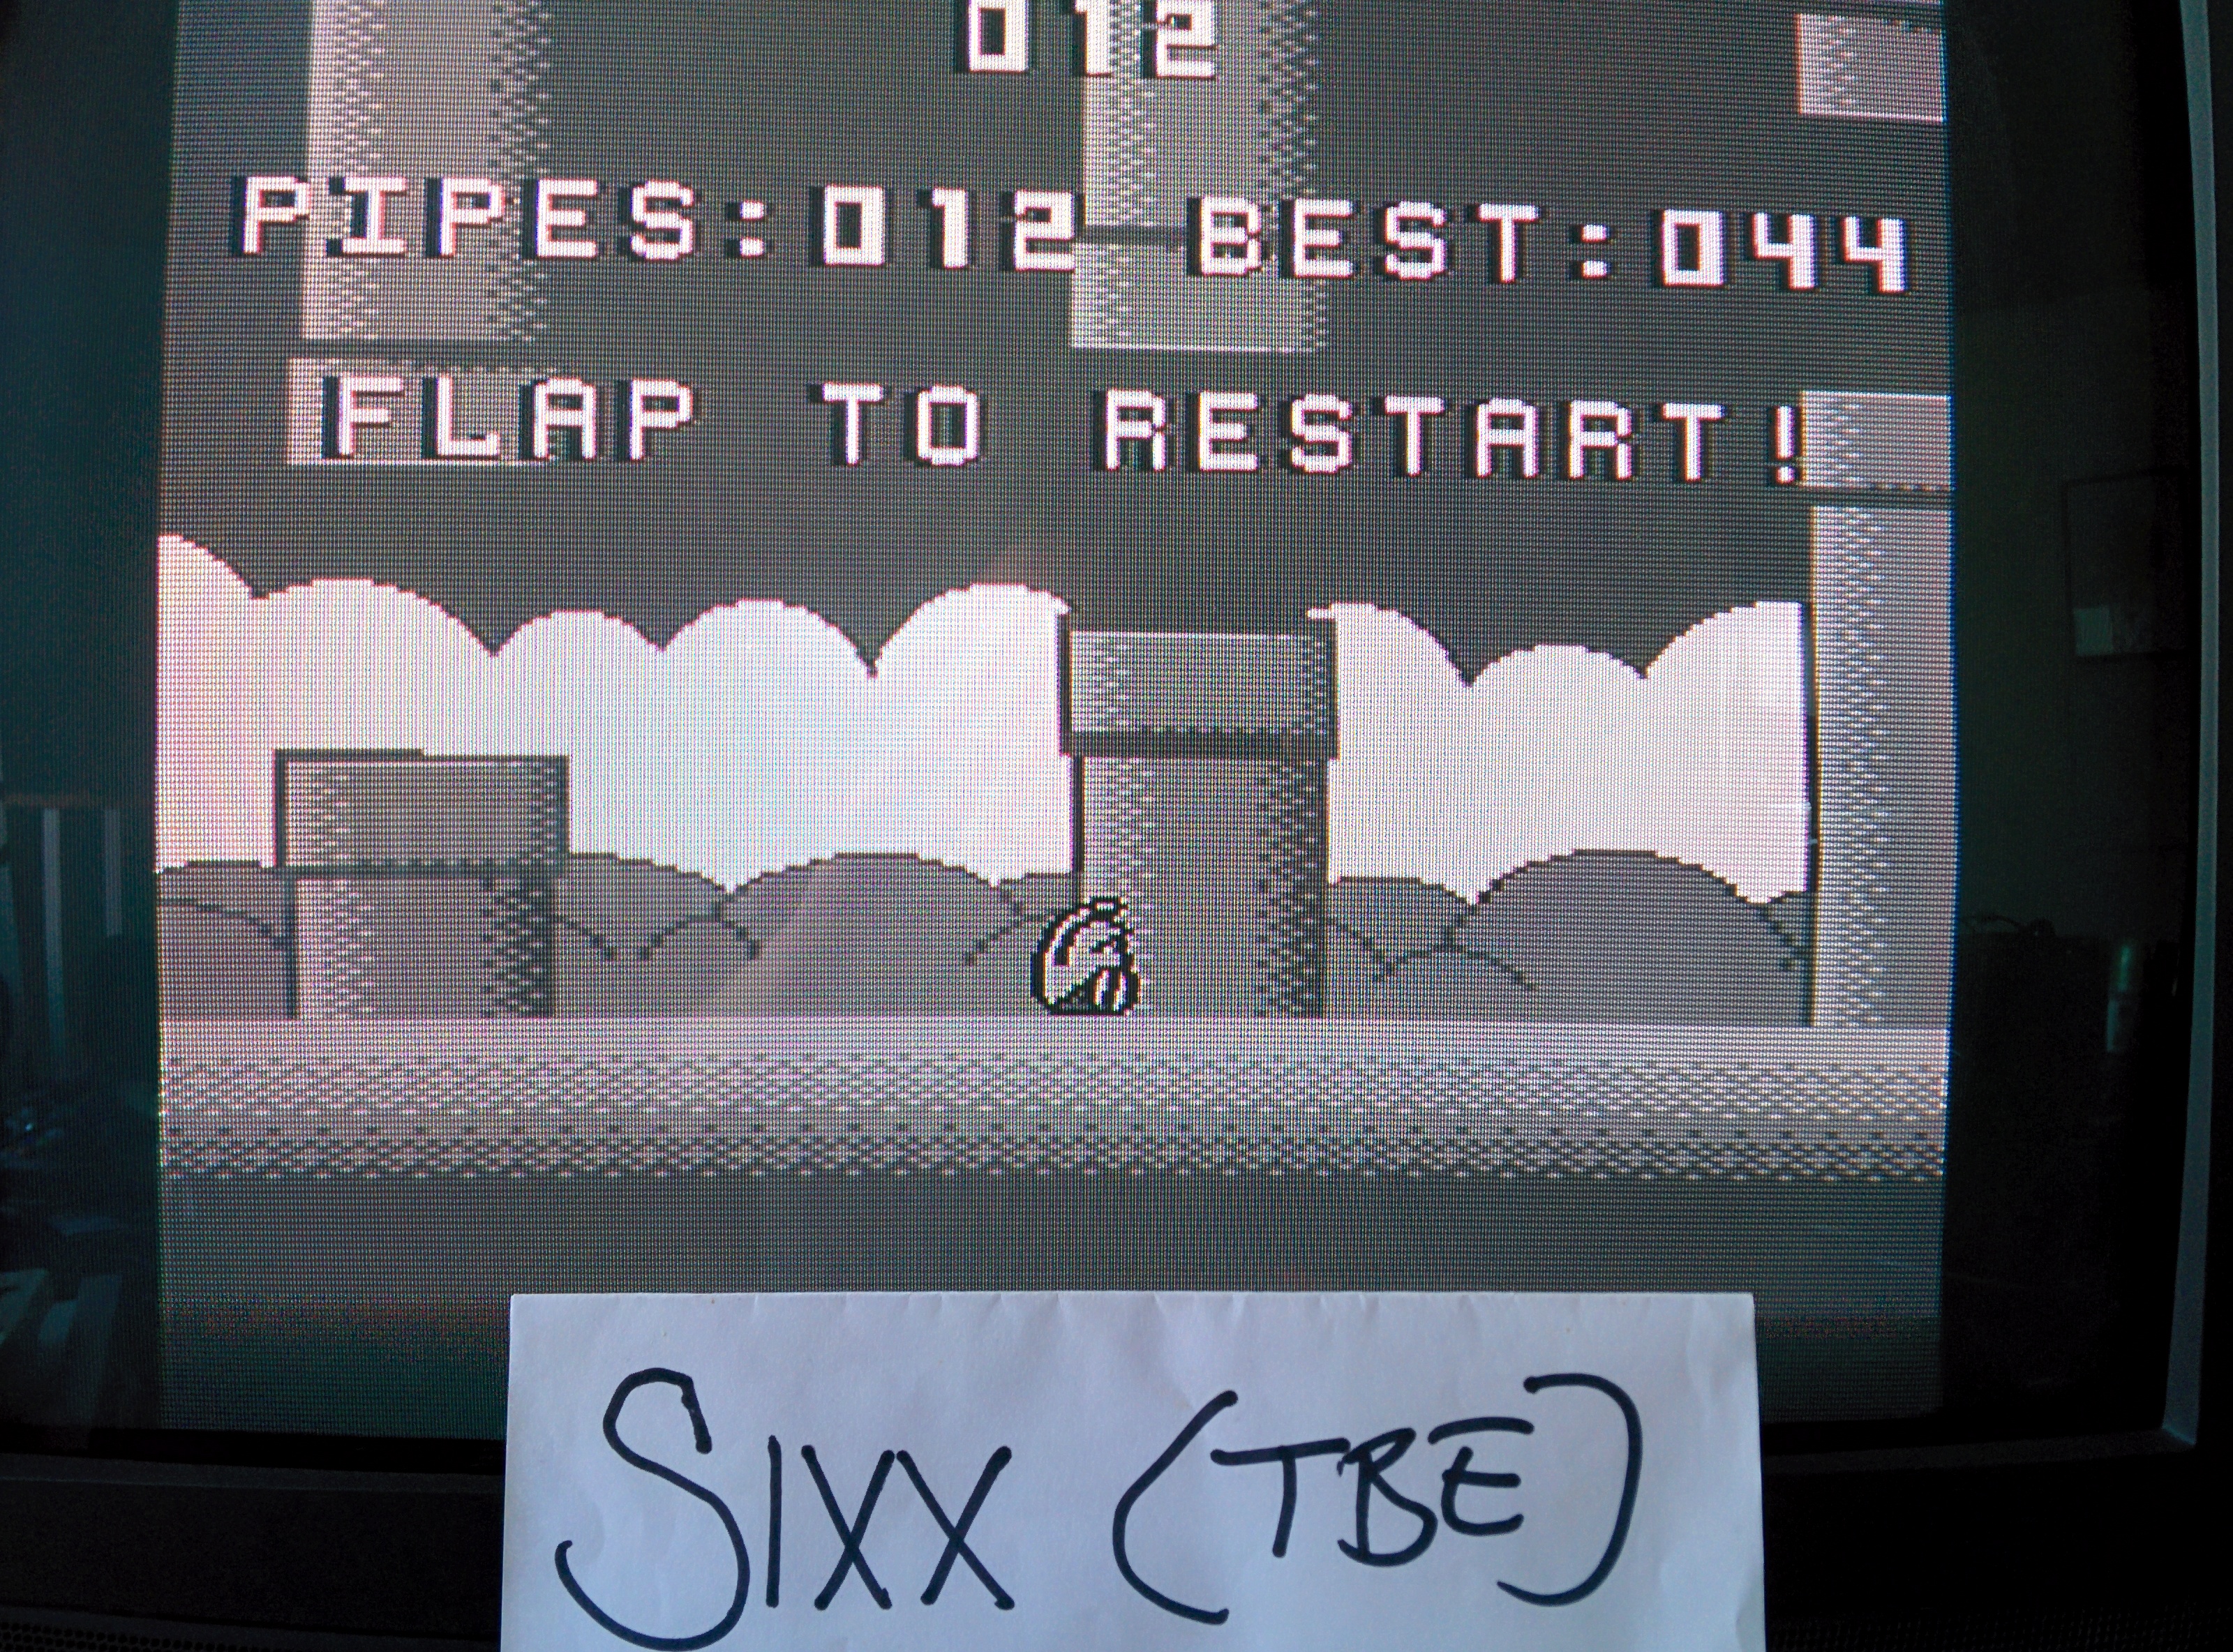 Sixx: Happy Flappy (Commodore 64) 44 points on 2014-04-28 03:49:08